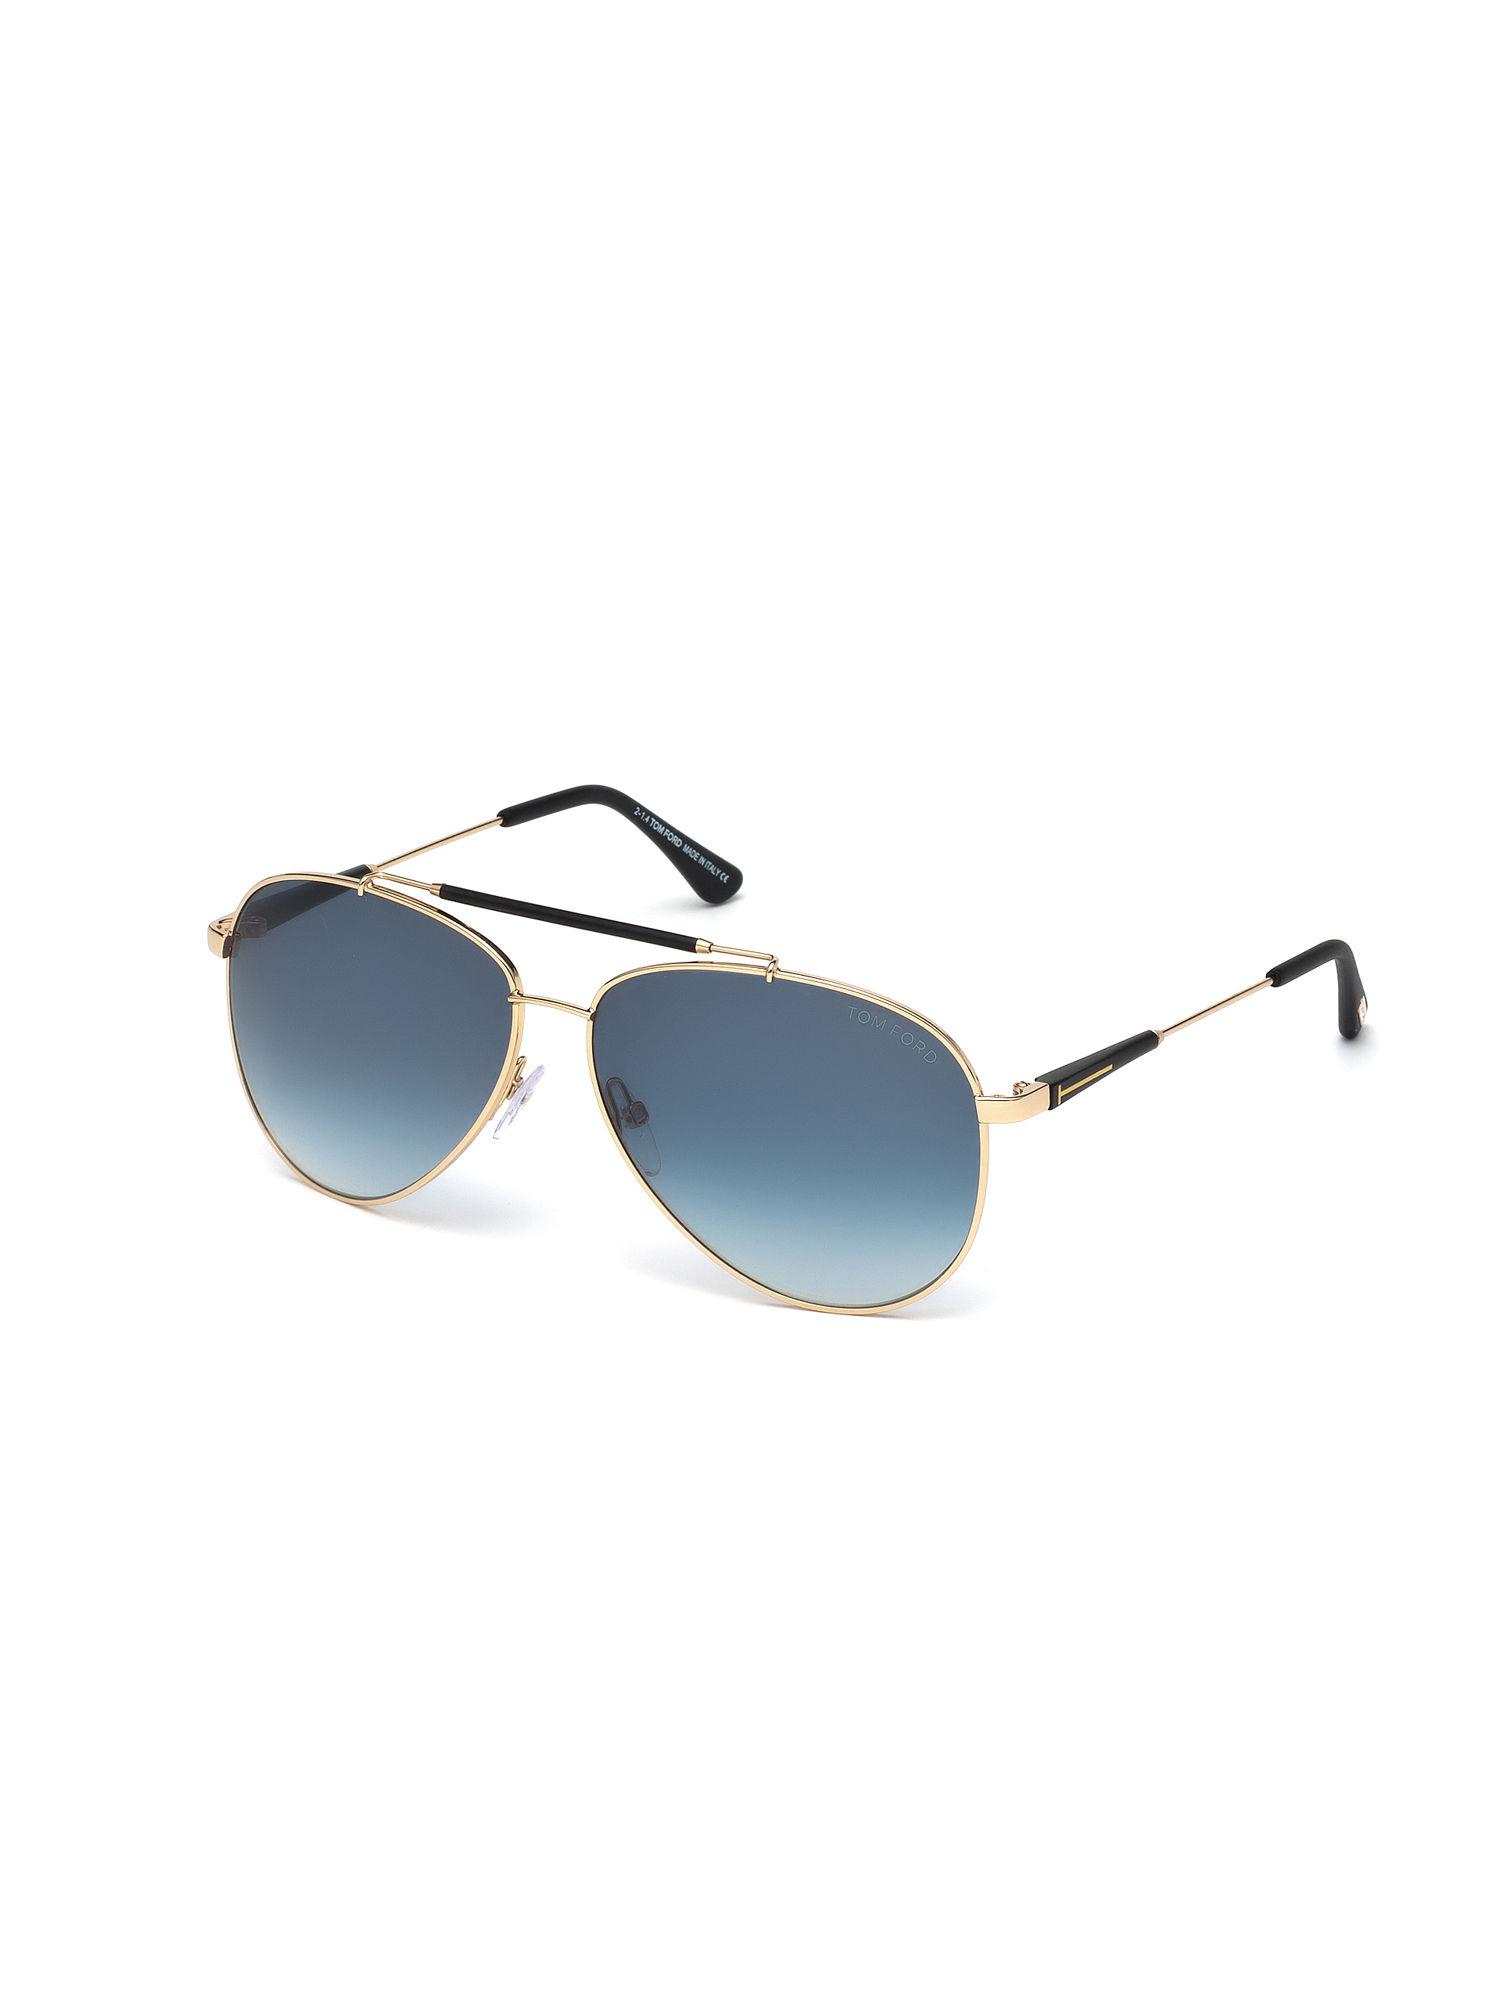 Gold Aviator Sunglasses - FT0378 60 28W